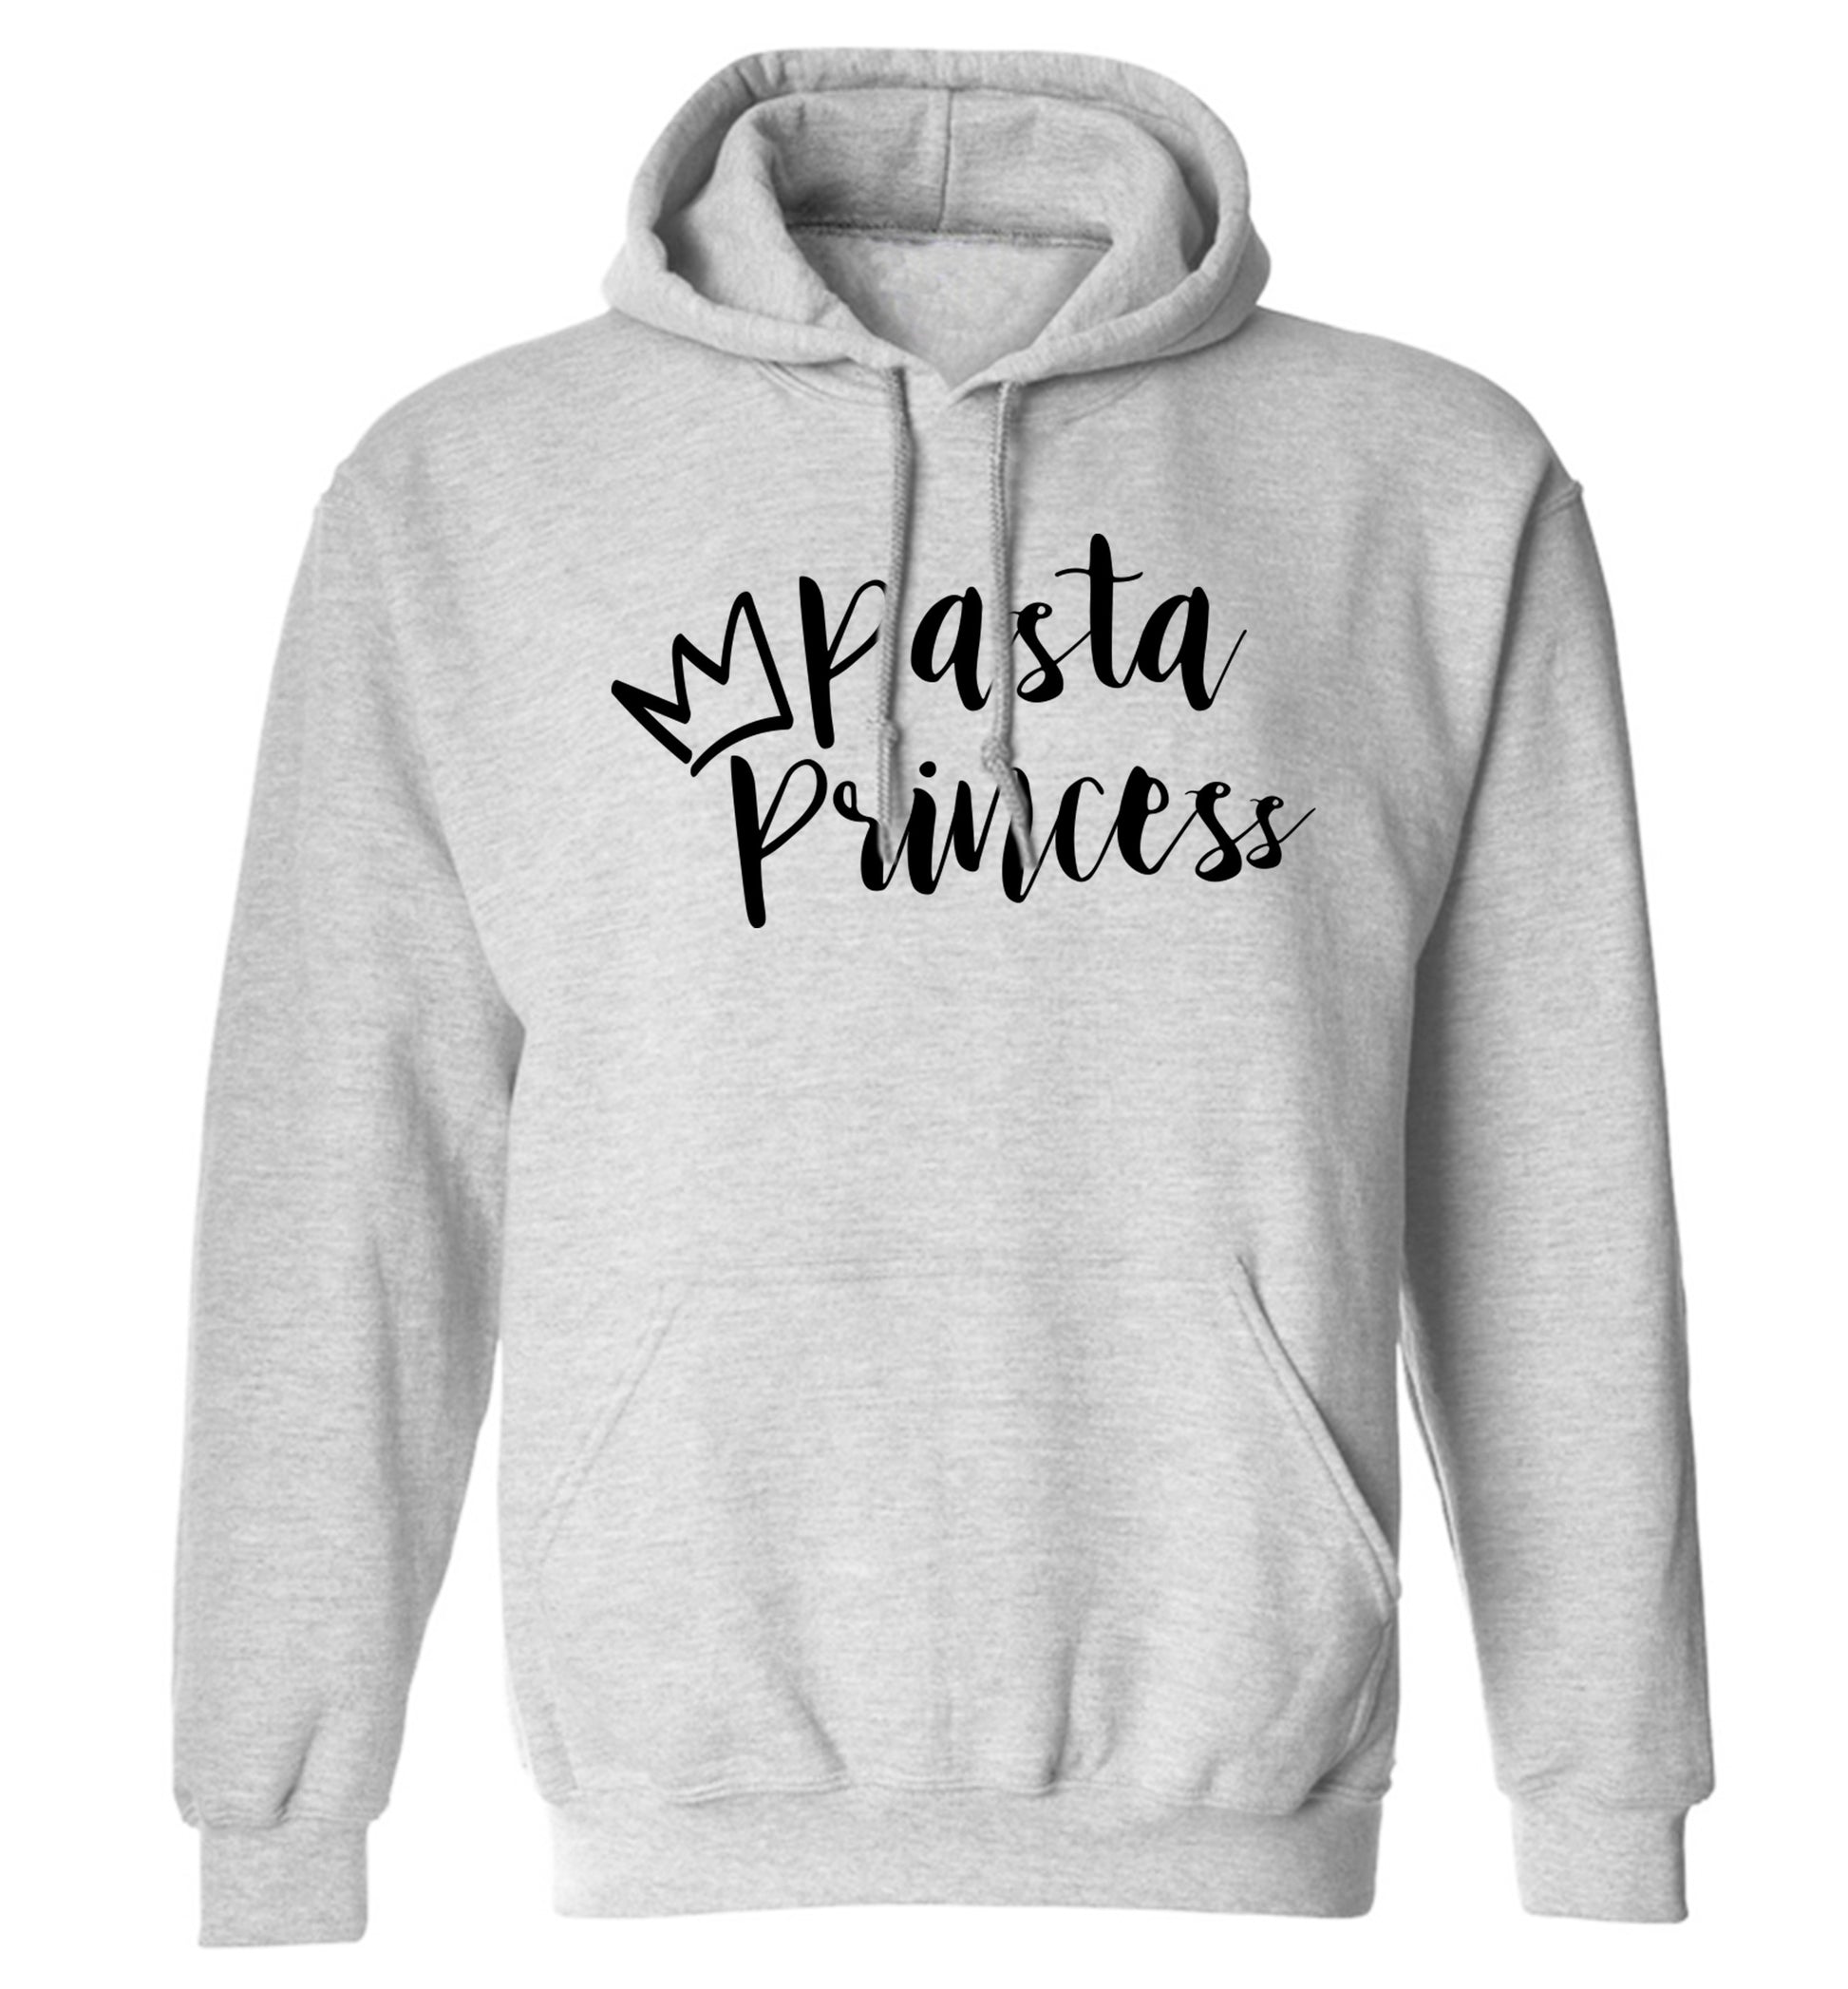 Pasta Princess adults unisex grey hoodie 2XL